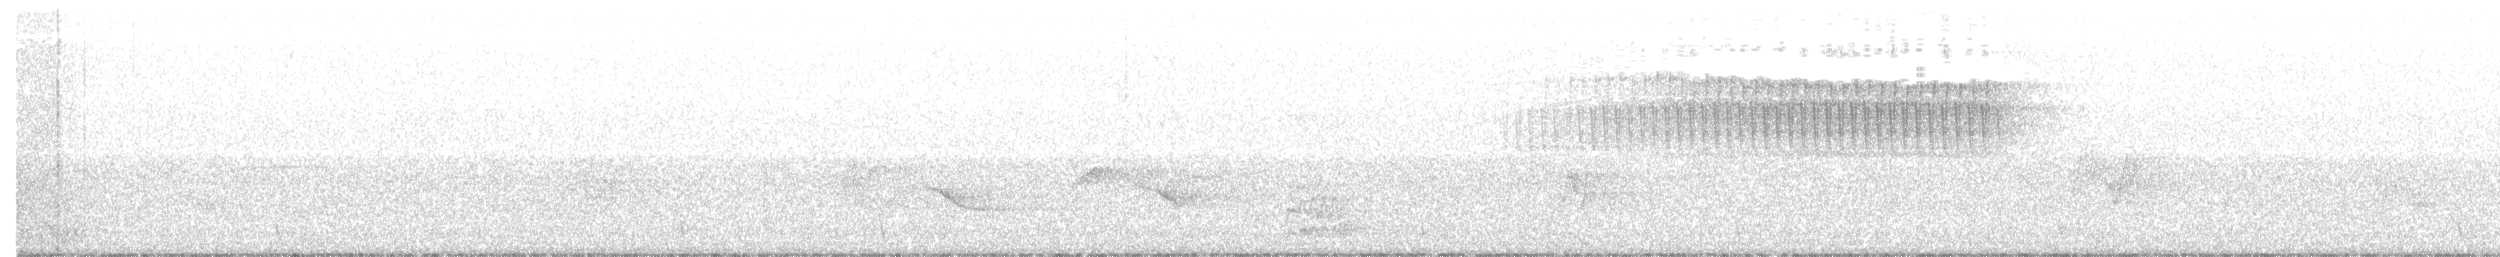 Paruline vermivore - ML620006035